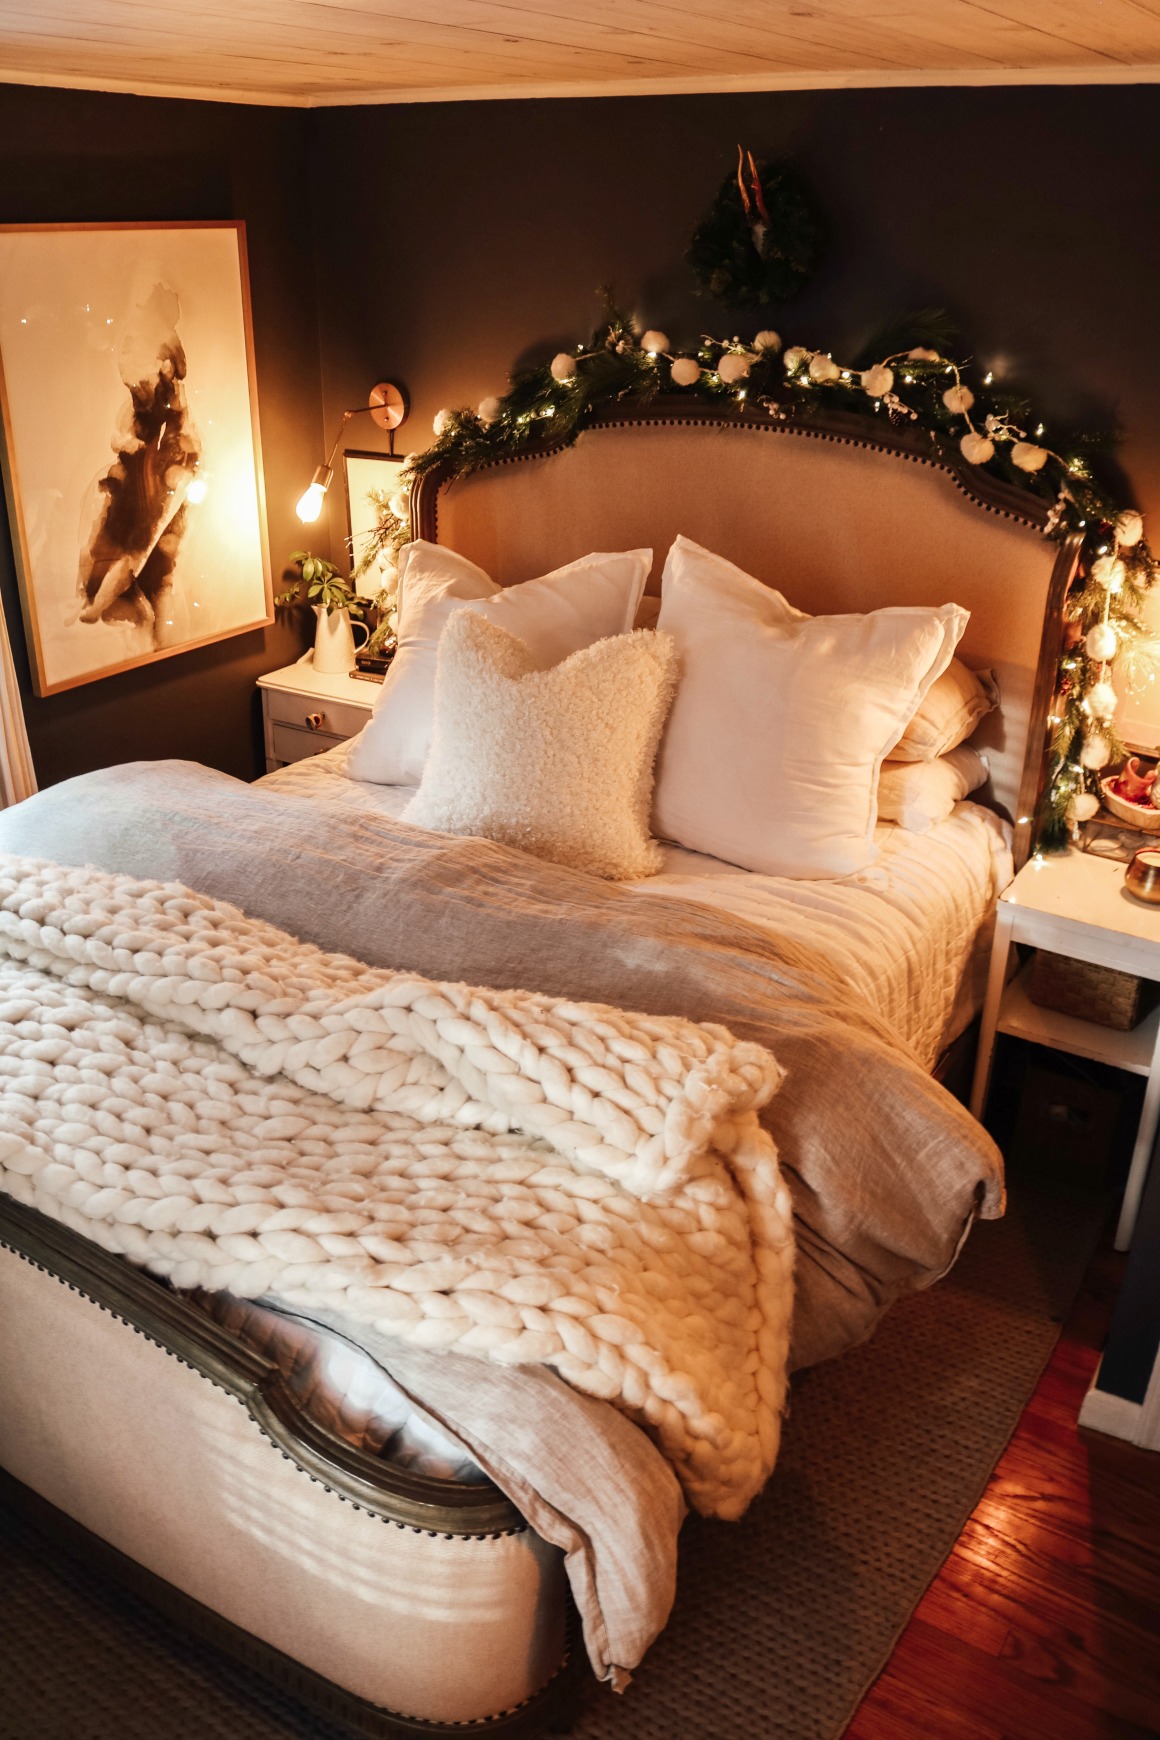 Winter Master Bedroom and Kids Christmas Room